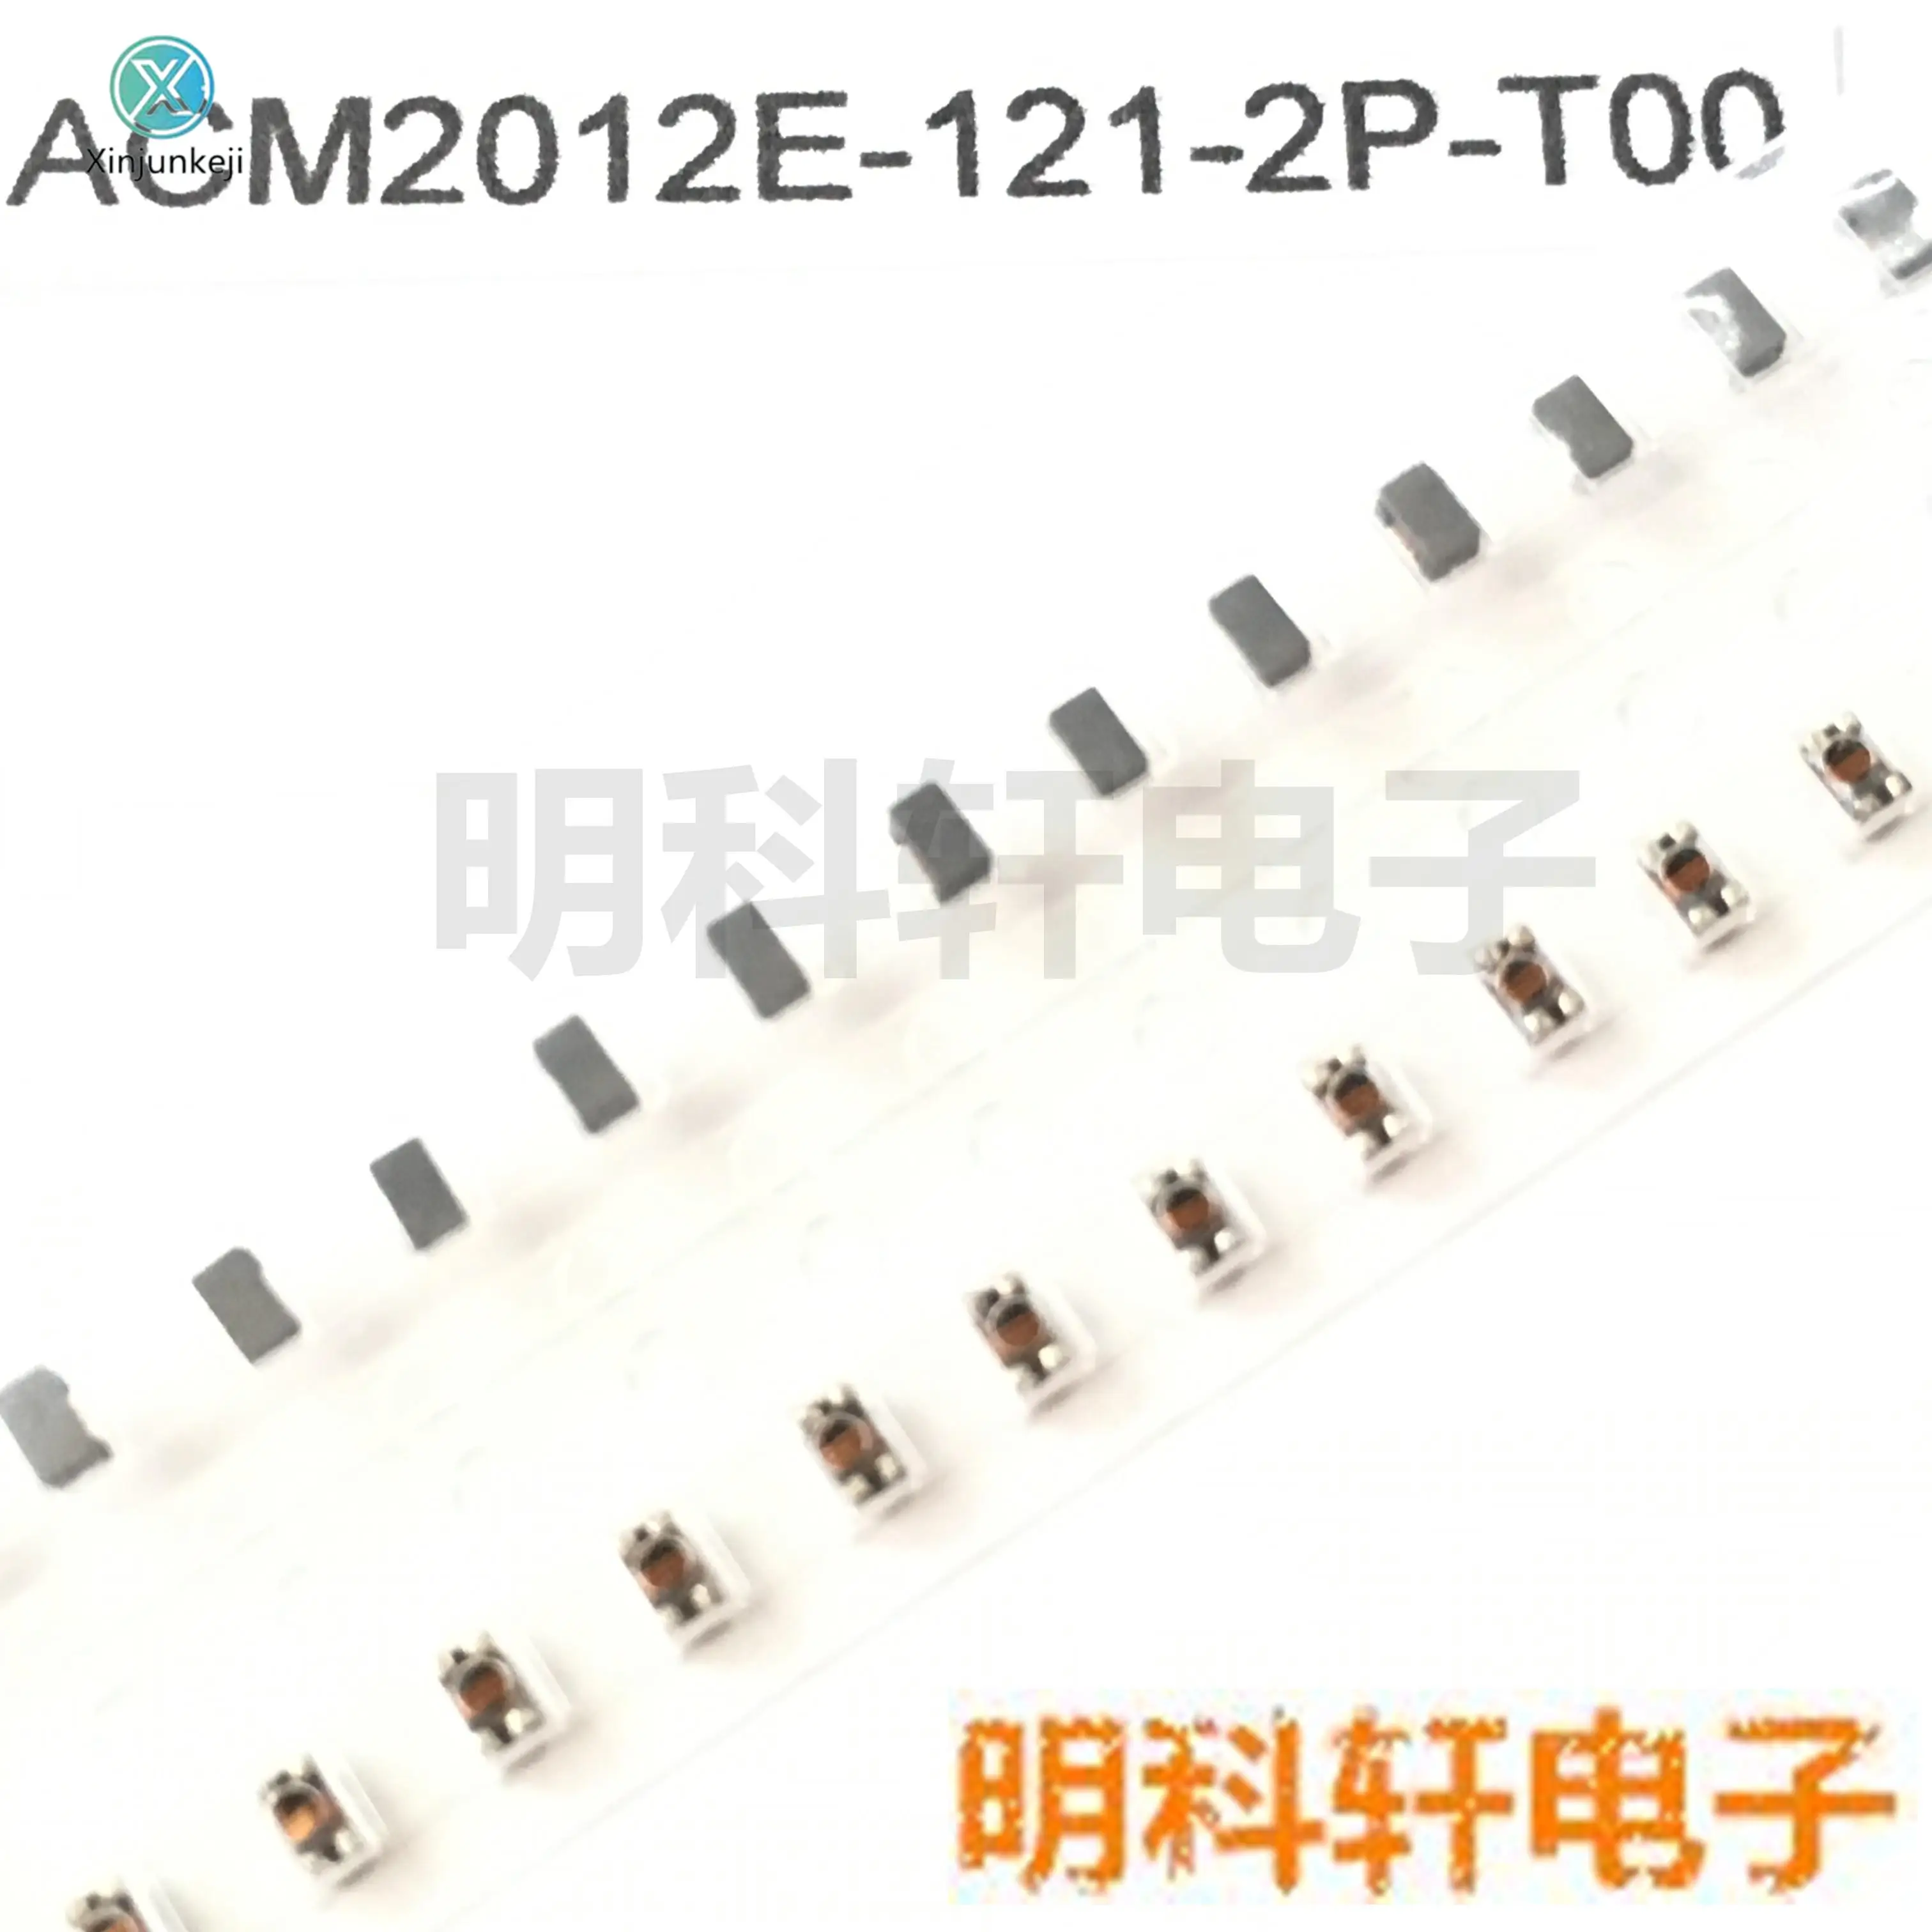 

30pcs orginal new ACM2012E-121-2P-T00 0805 120R SMD common mode filter inductor